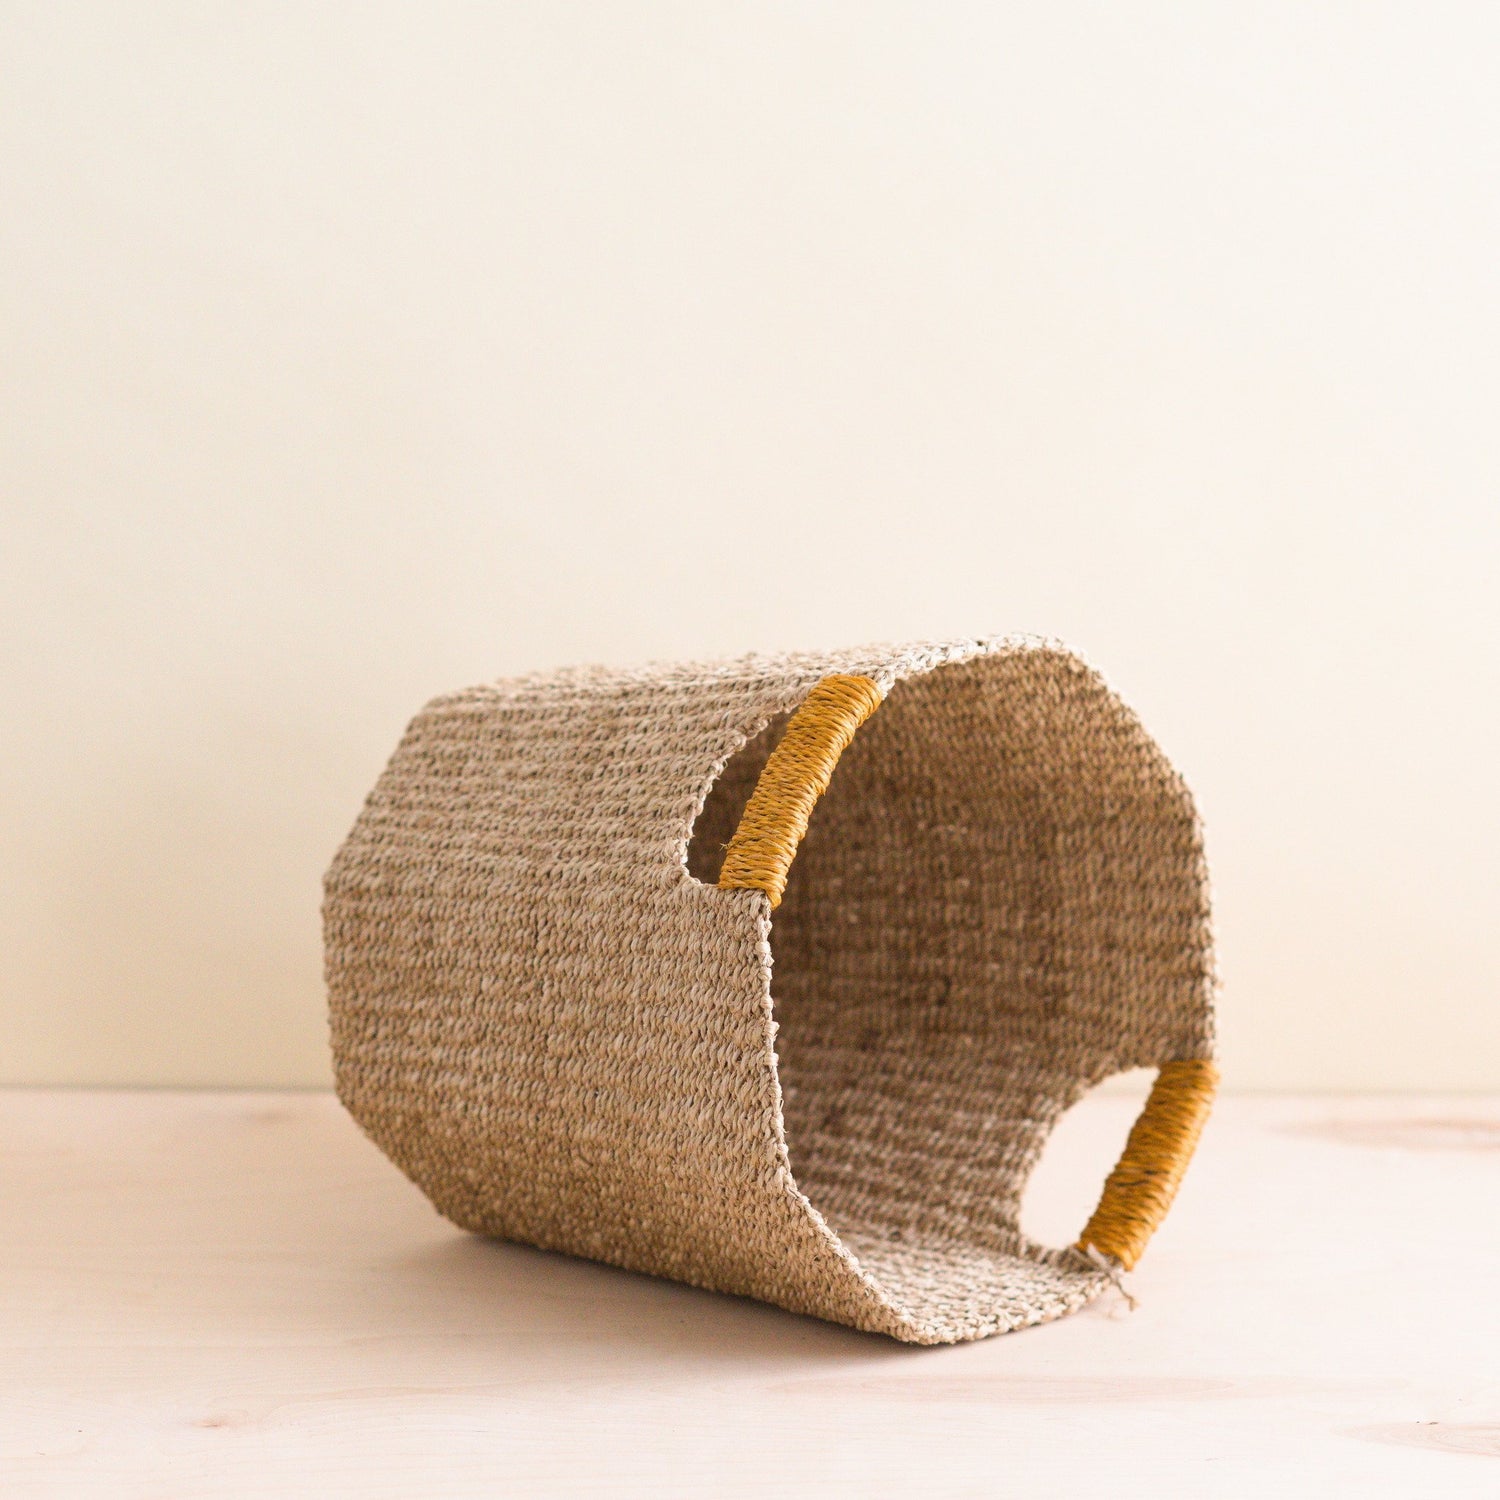 Baskets - Natural Octagon Basket with Mustard Handle - Handwoven Bin | LIKHÂ - LIKHÂ